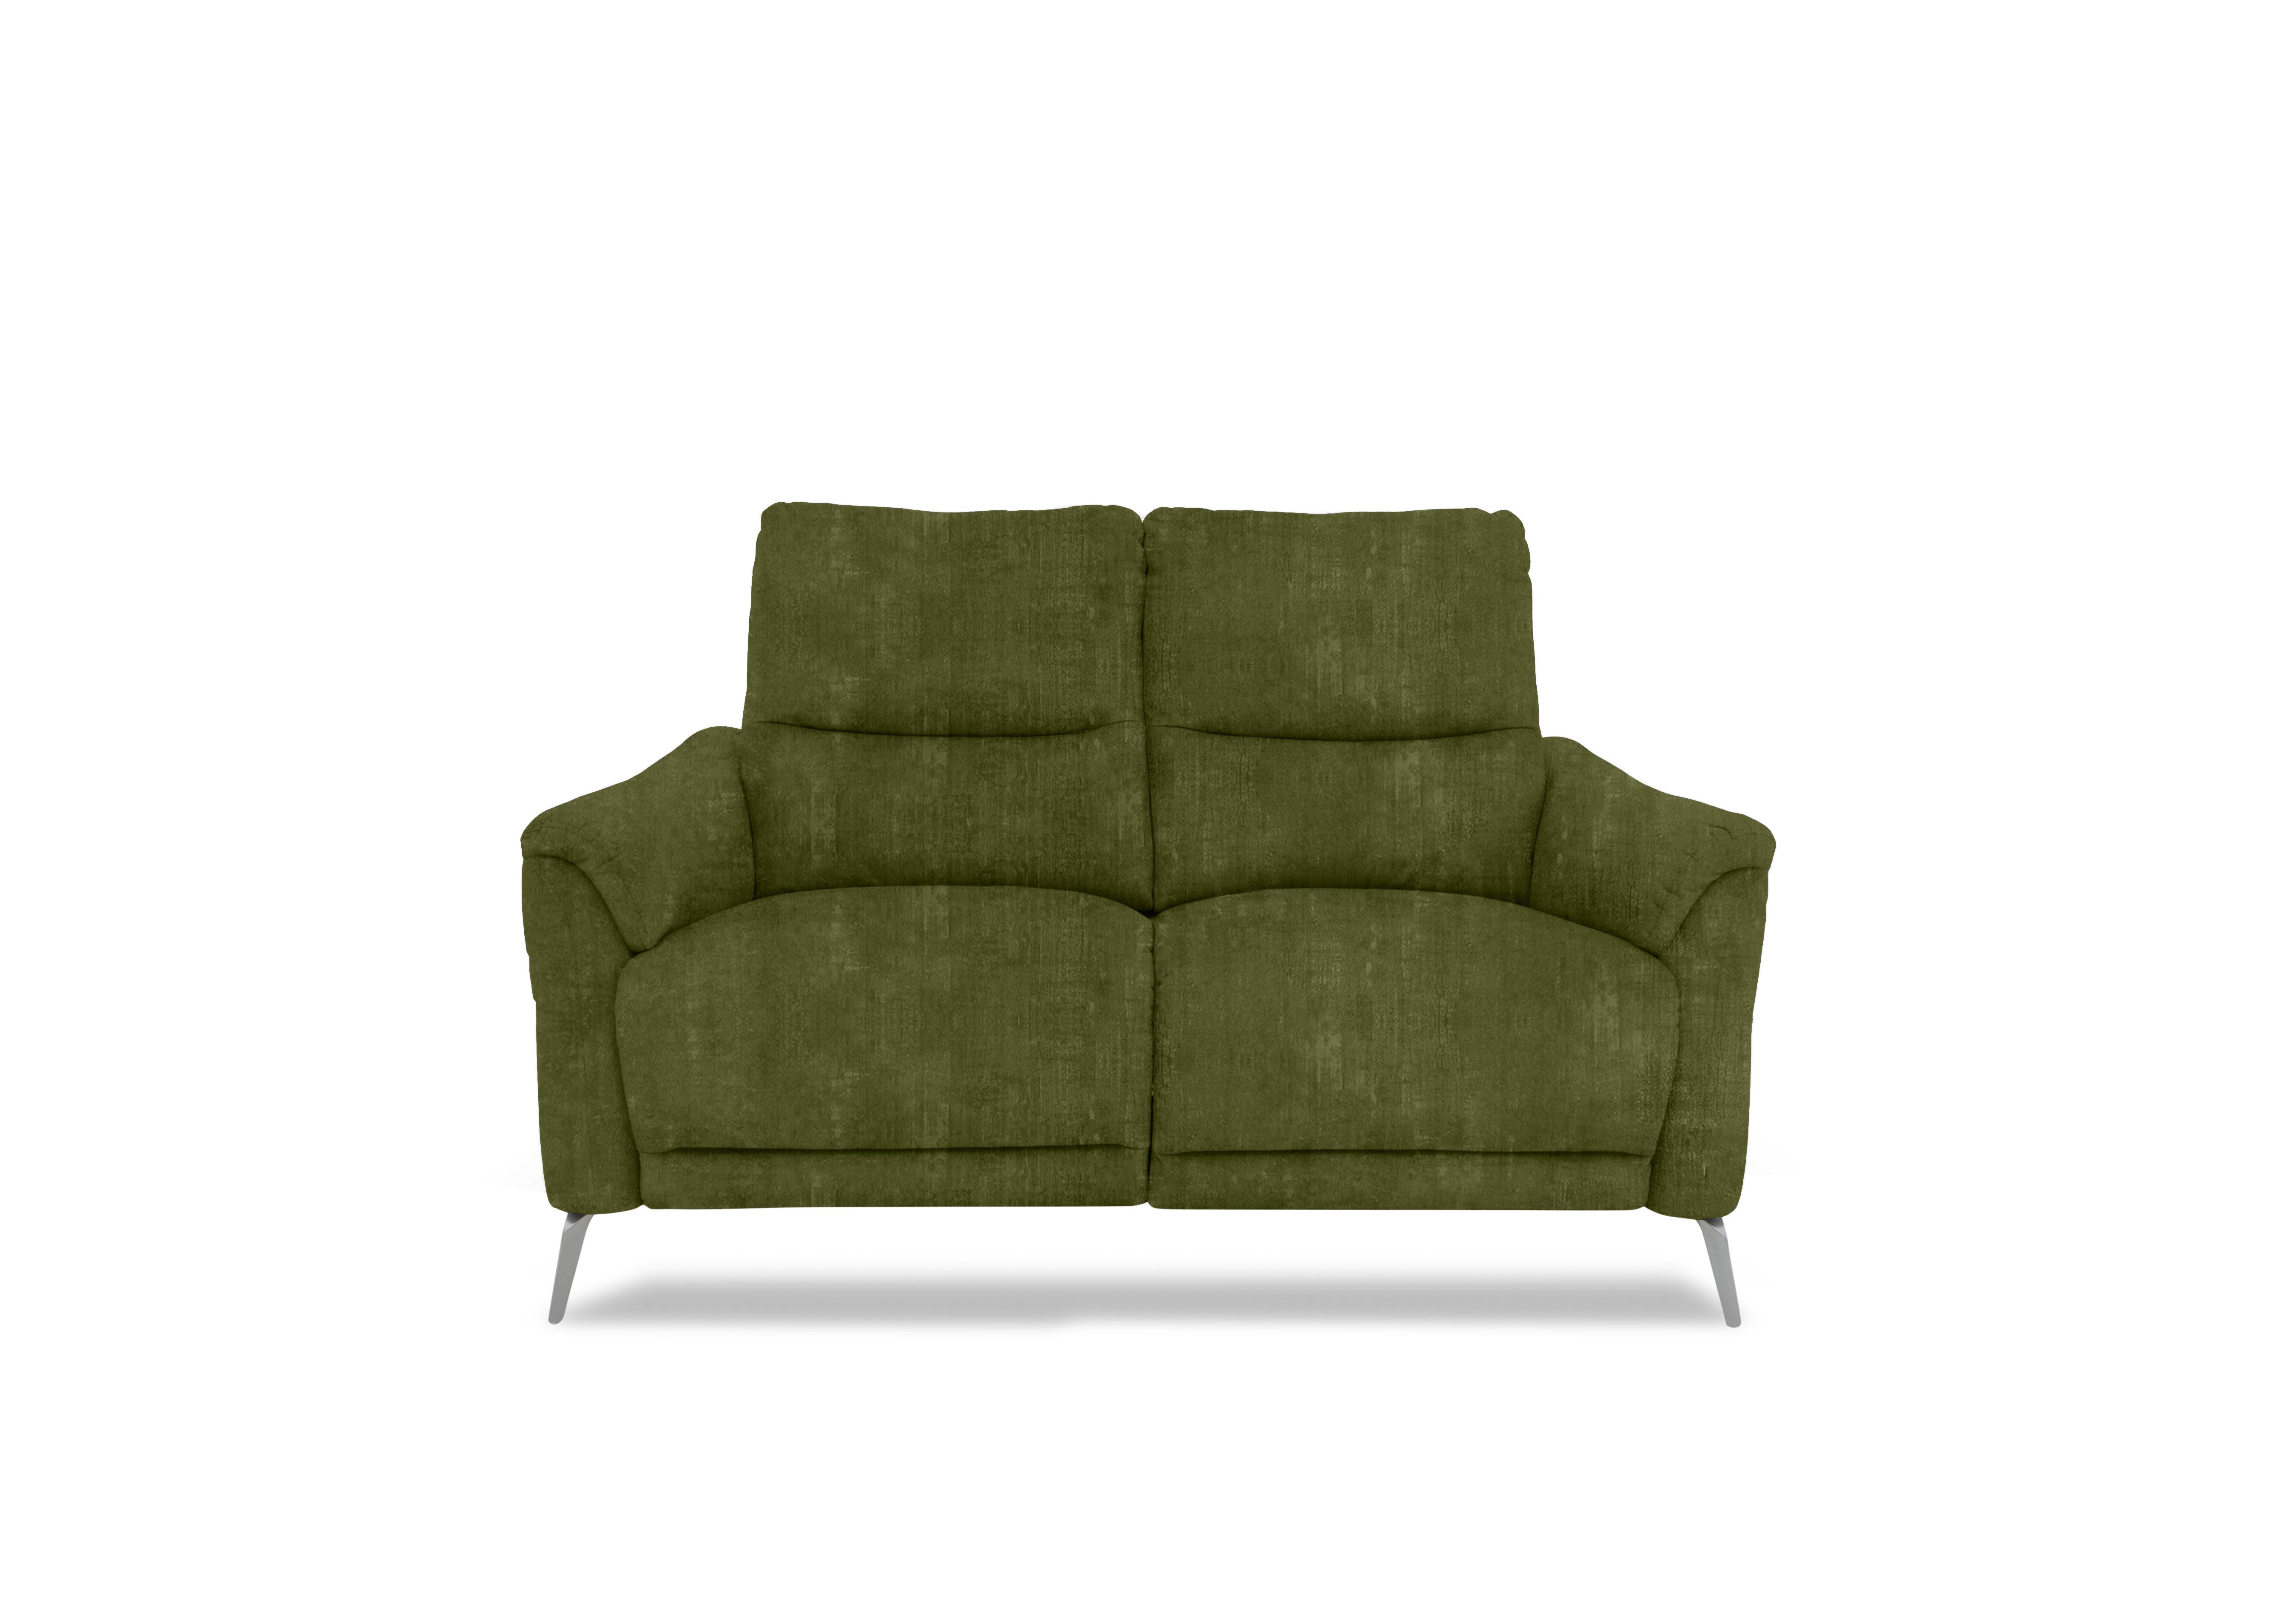 Daytona 2 Seater Fabric Sofa in 52003 Heritage Olive on Furniture Village